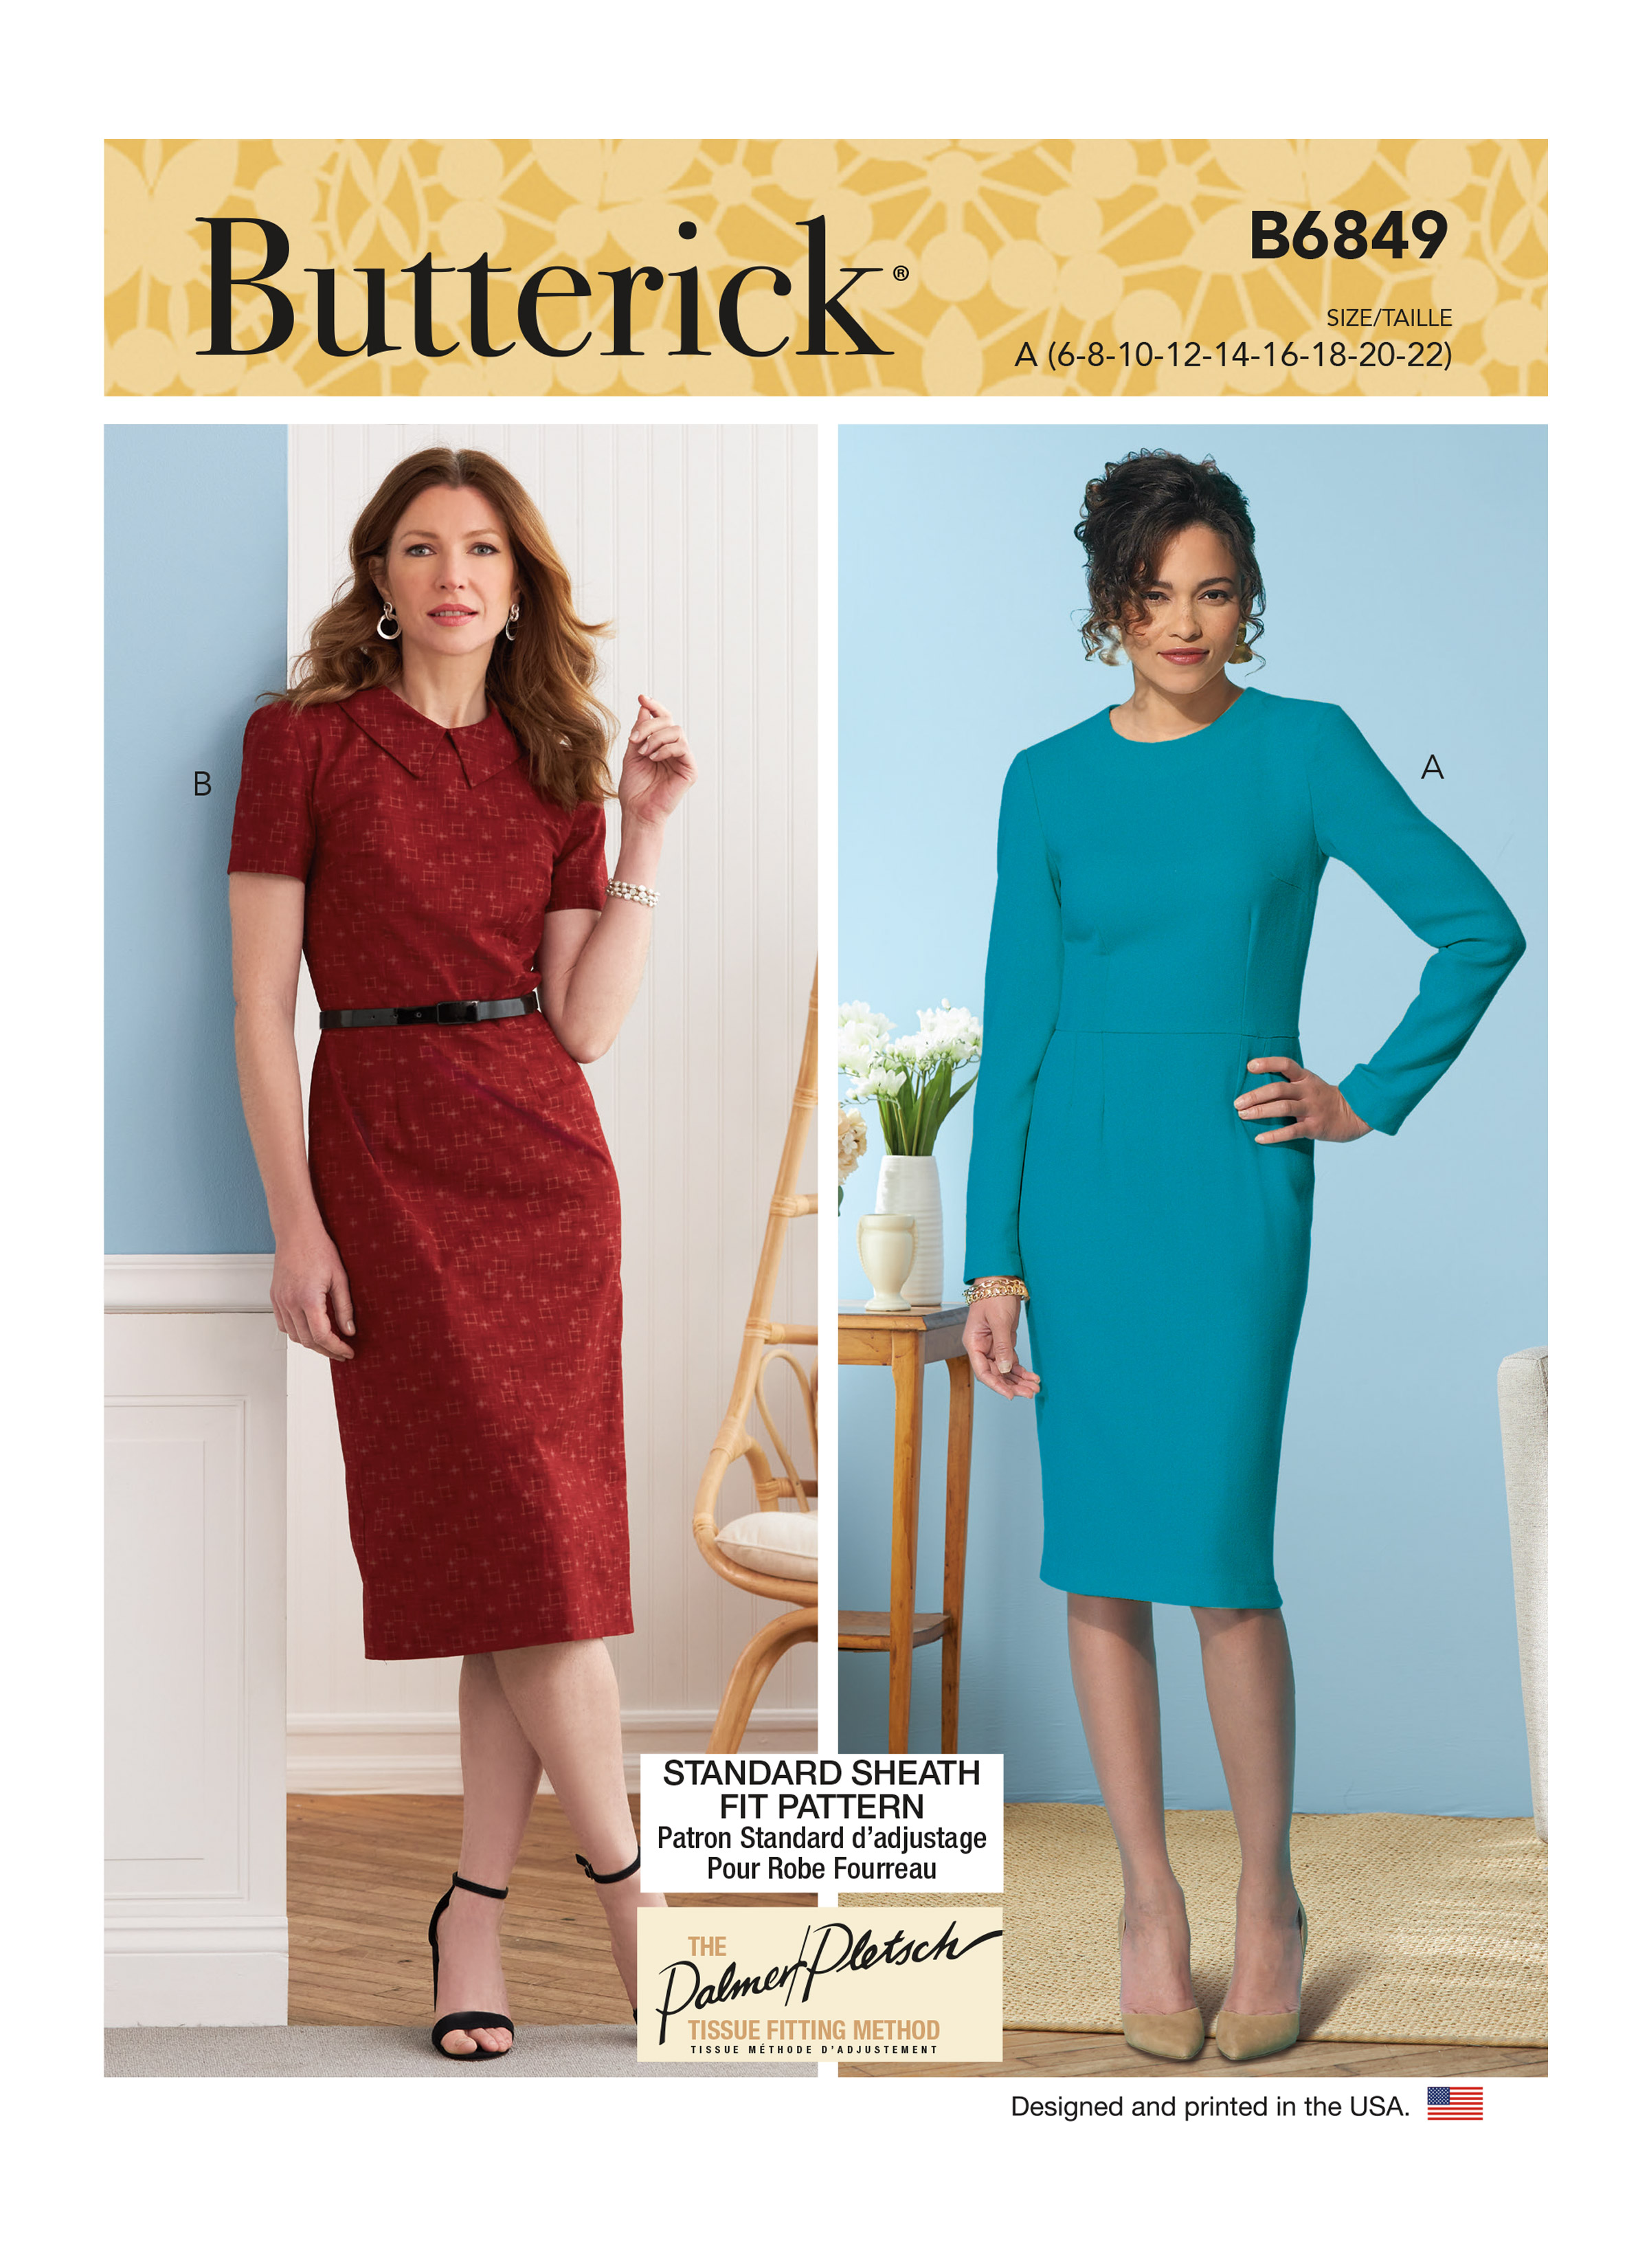 Butterick 6849 Misses' Fit Pattern Dresses & Optional Collar